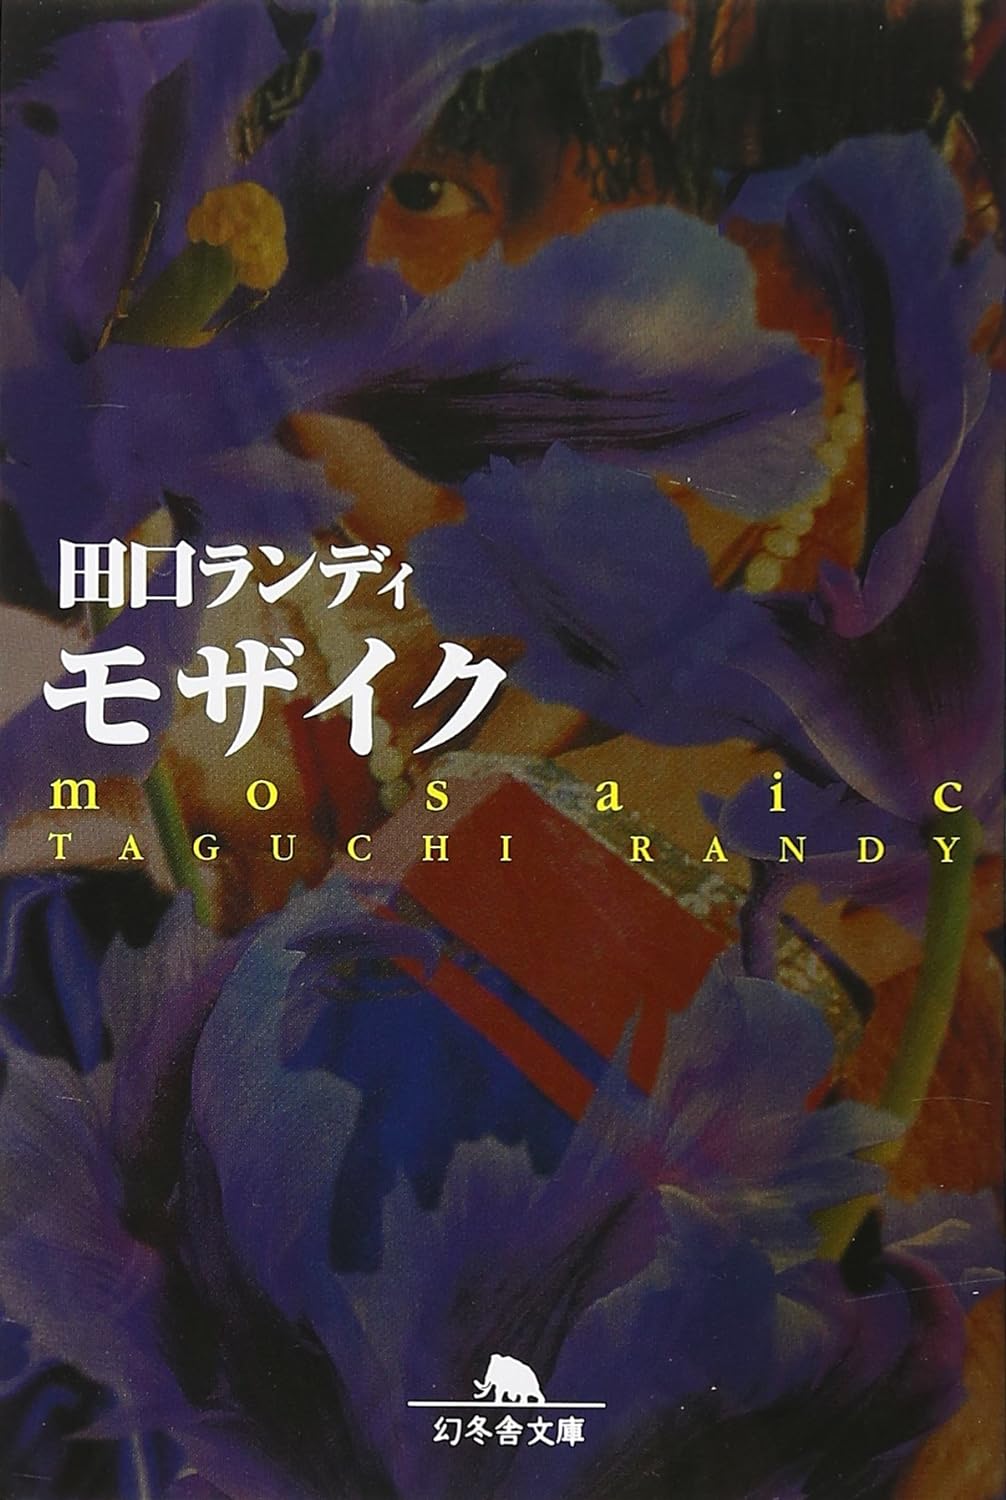 Mosaico di Taguchi Randy in giapponese